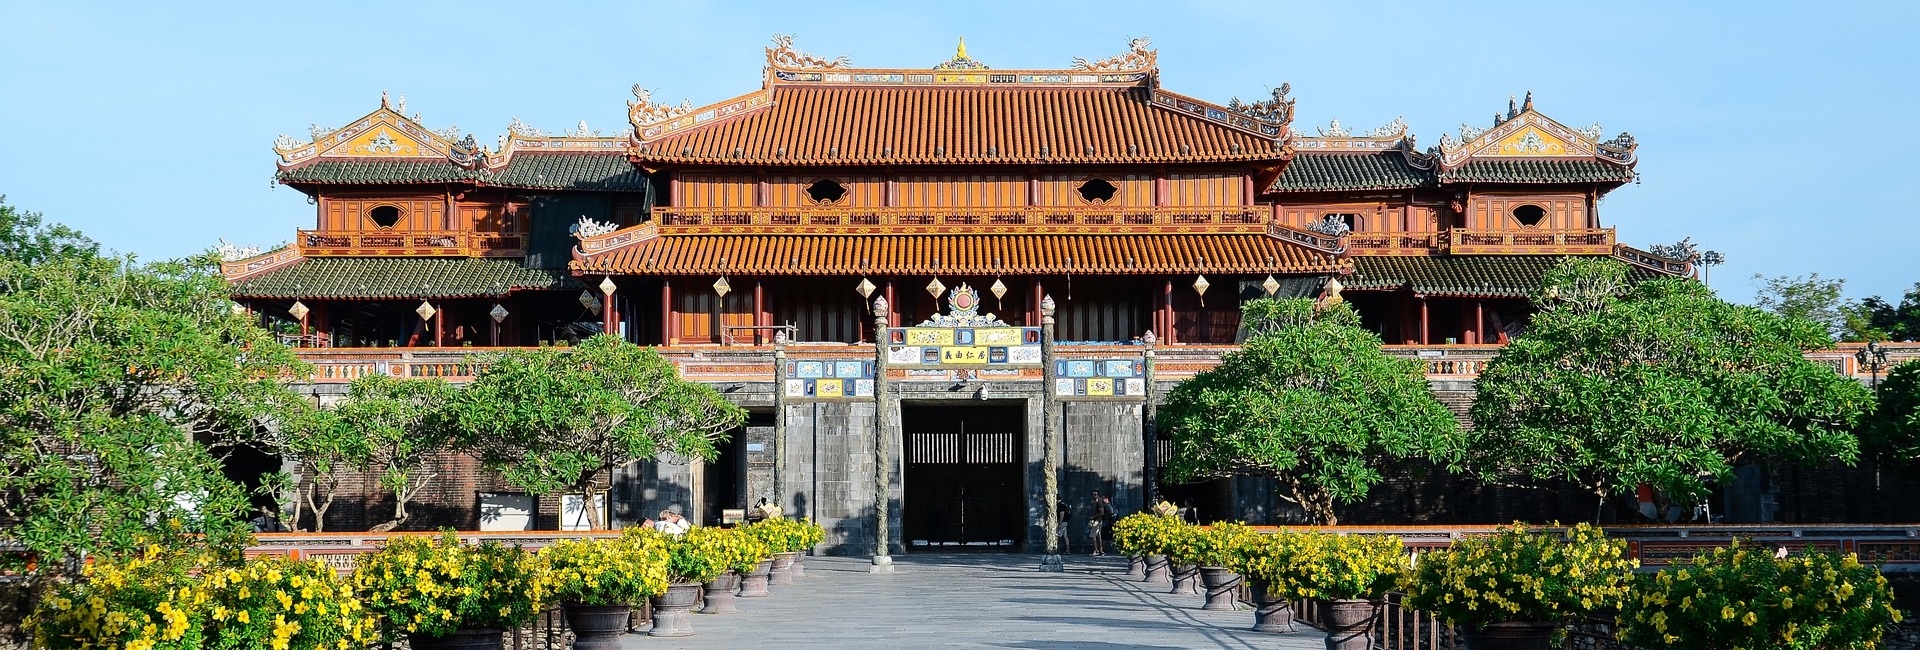 Hue Imperial Citadel: Exploring Vietnam’s Royal Legacy